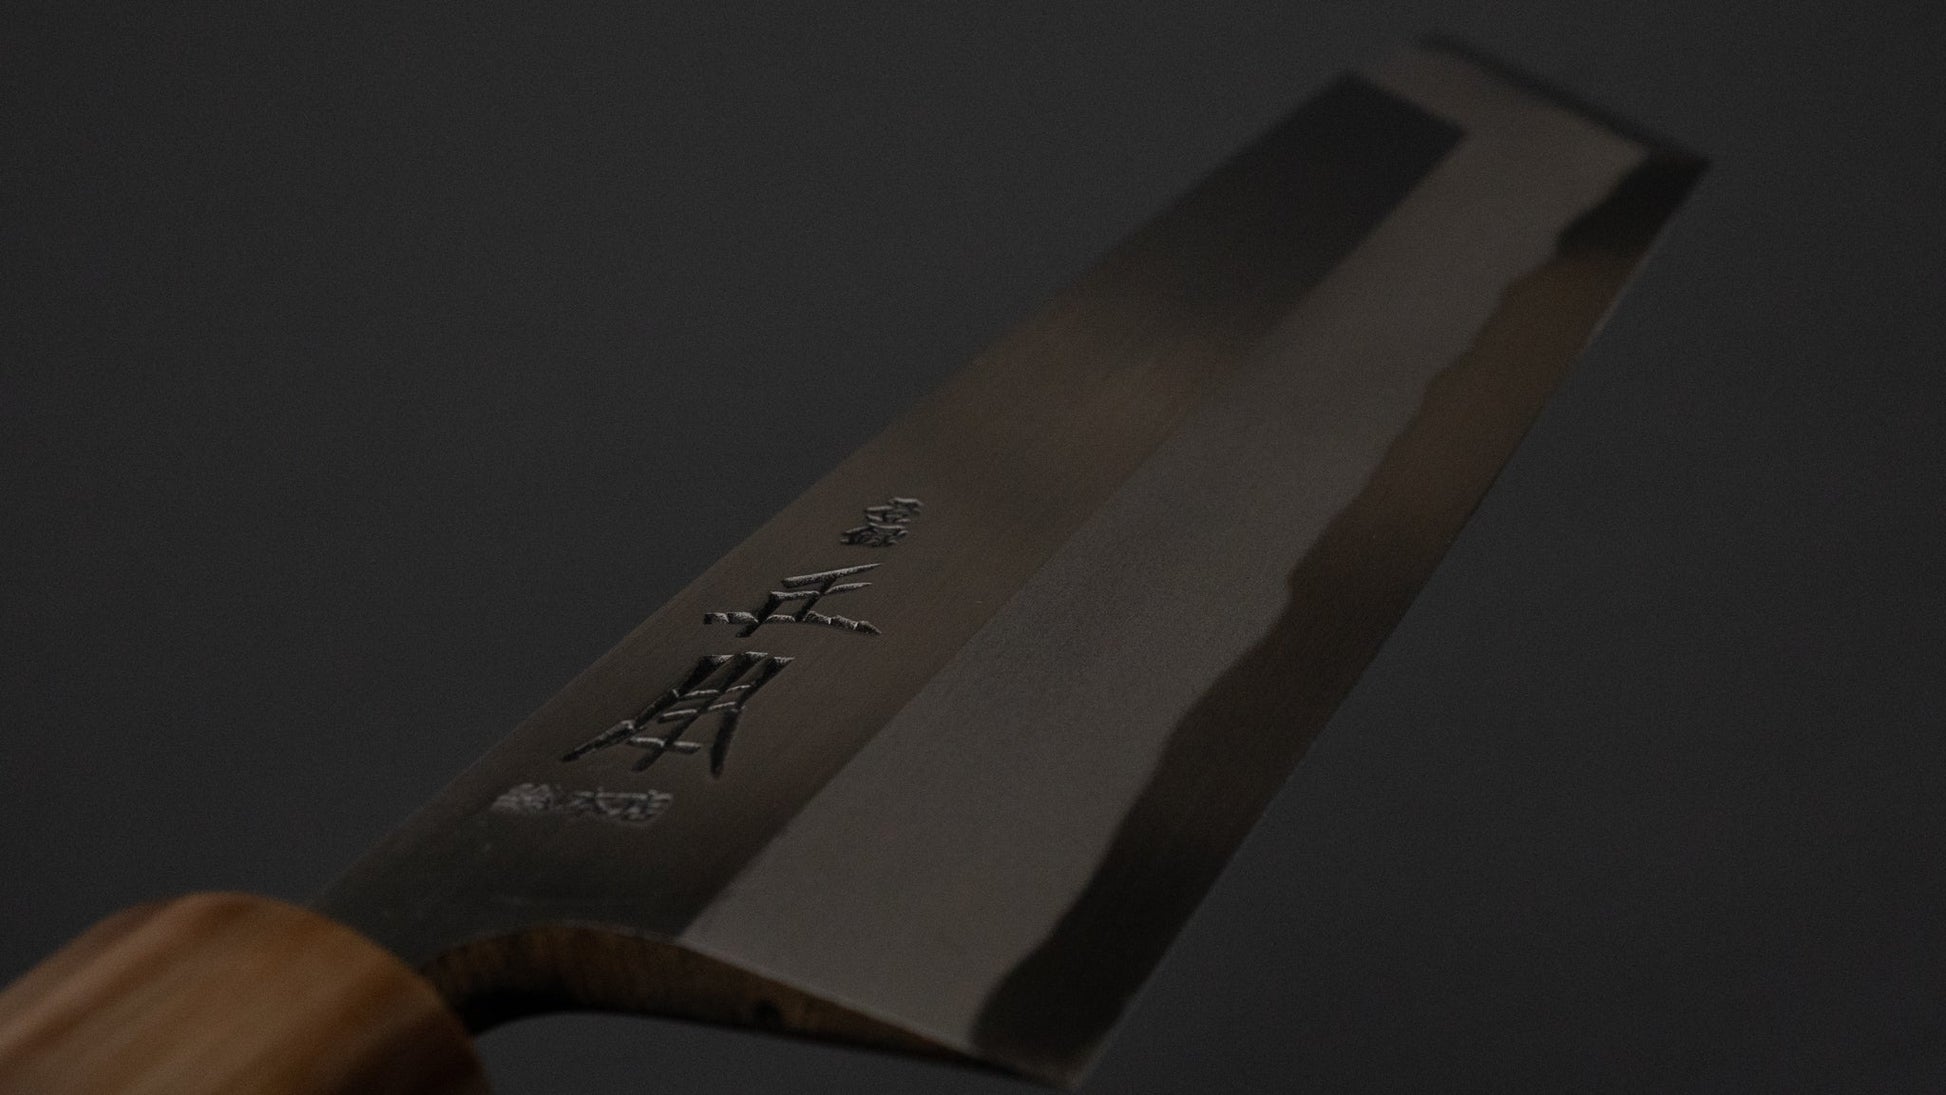 Masamoto Sohonten NOS Edo Saki 225mm Ho Wood Handle | HITOHIRA